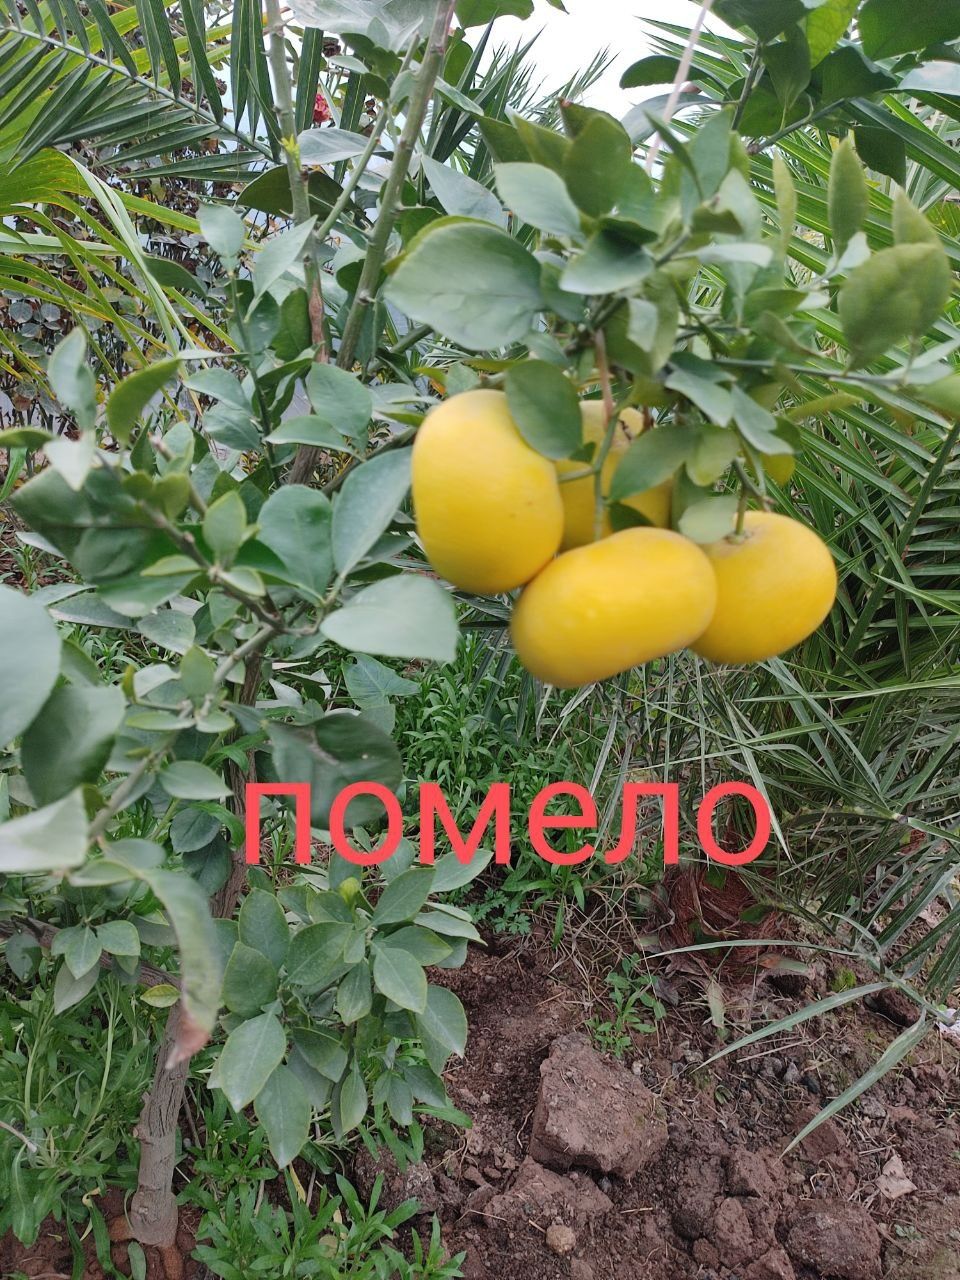 Limon apilsin mandarin koʻchatlar